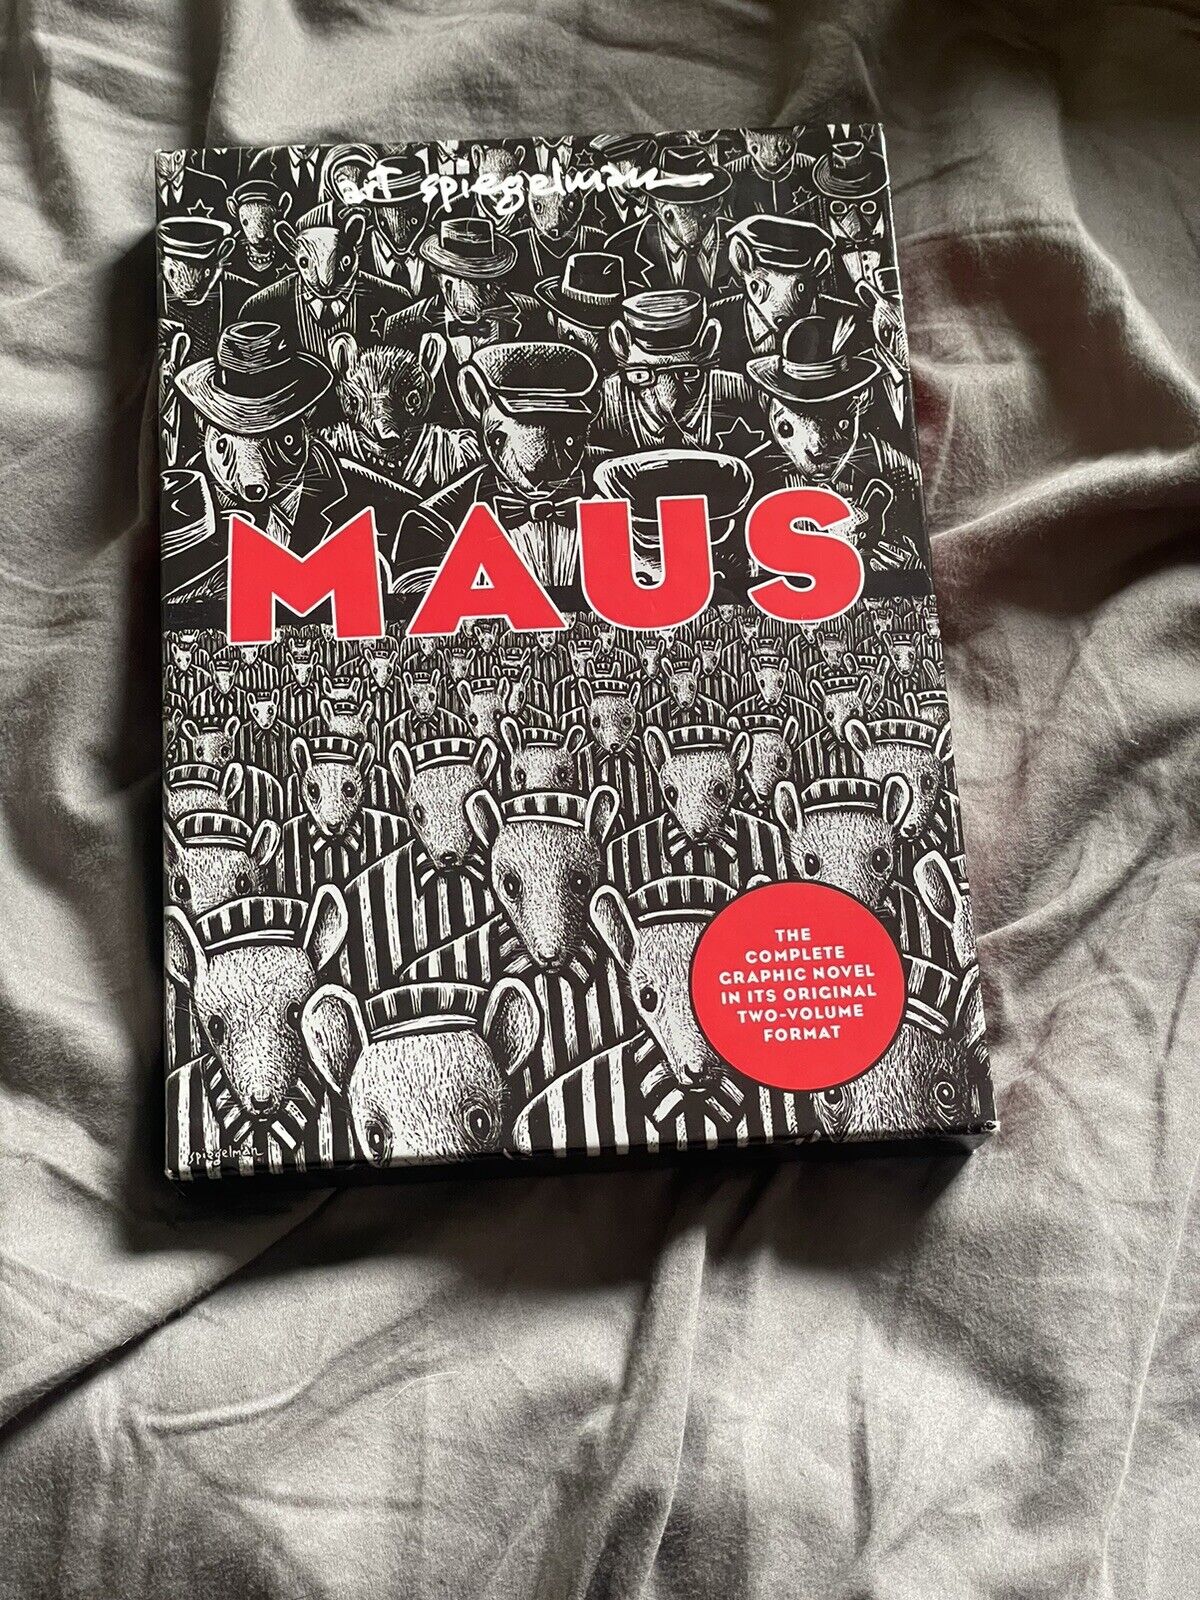 Maus I & II A Survivor\'s Tale Graphic Novels by Art Spiegelman 1986 / 1991 NEW